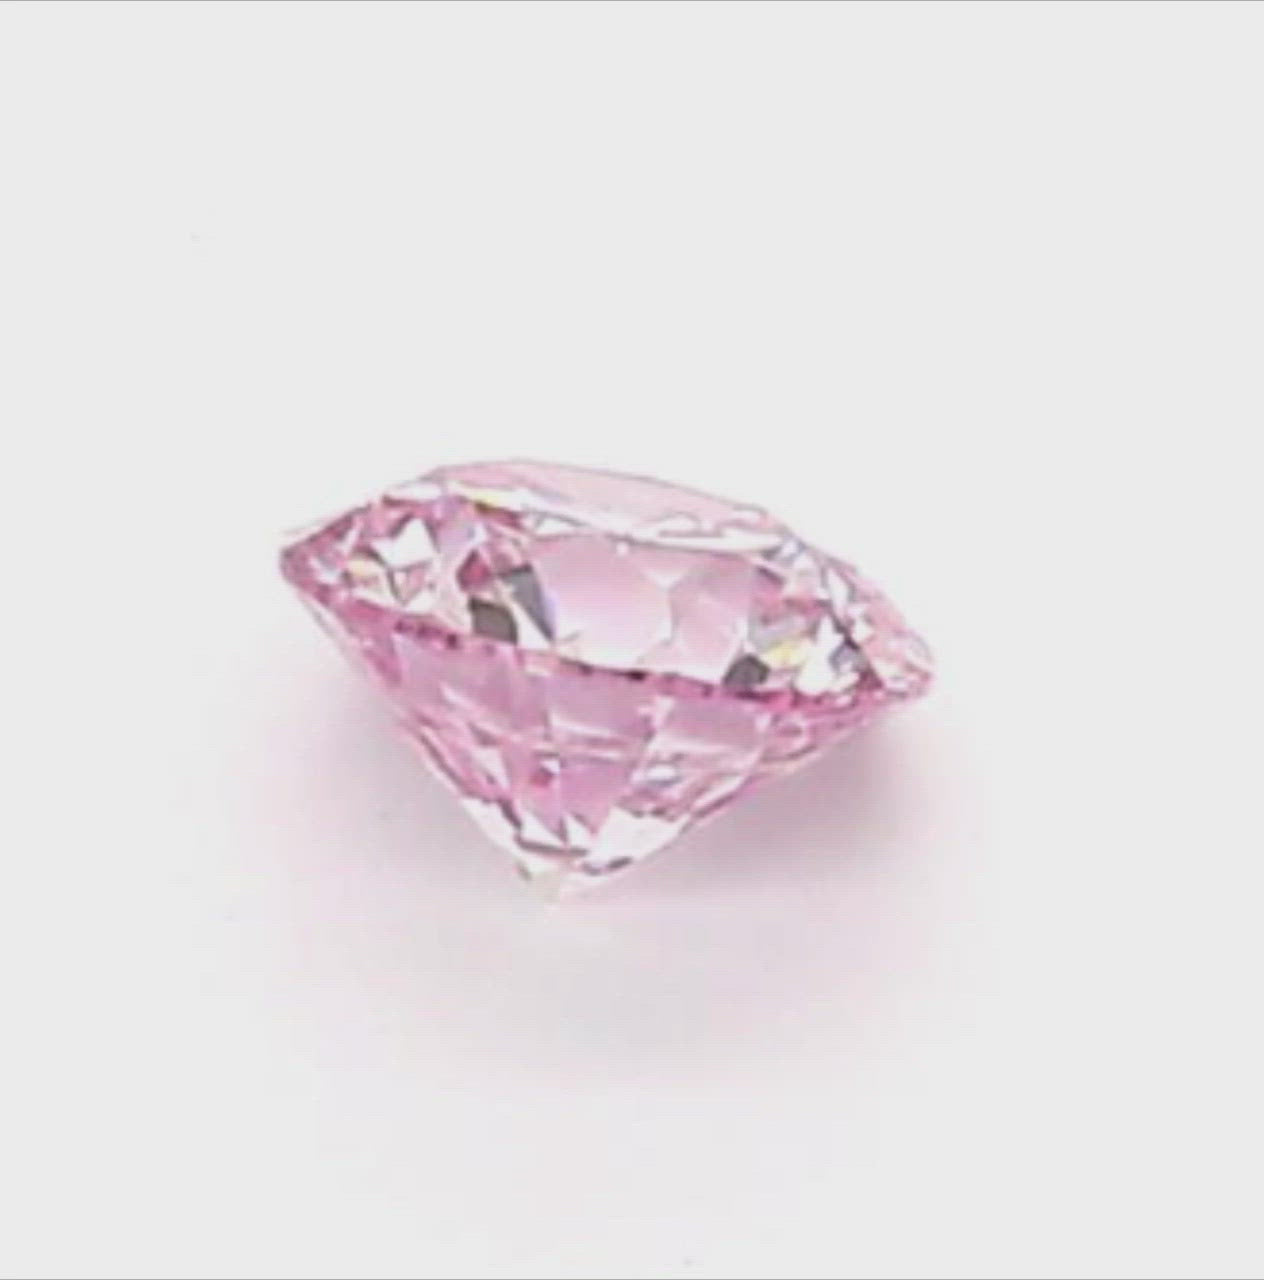 Fancy Light Pink Argyle Diamond Round Shape .12 Carat Full Video View